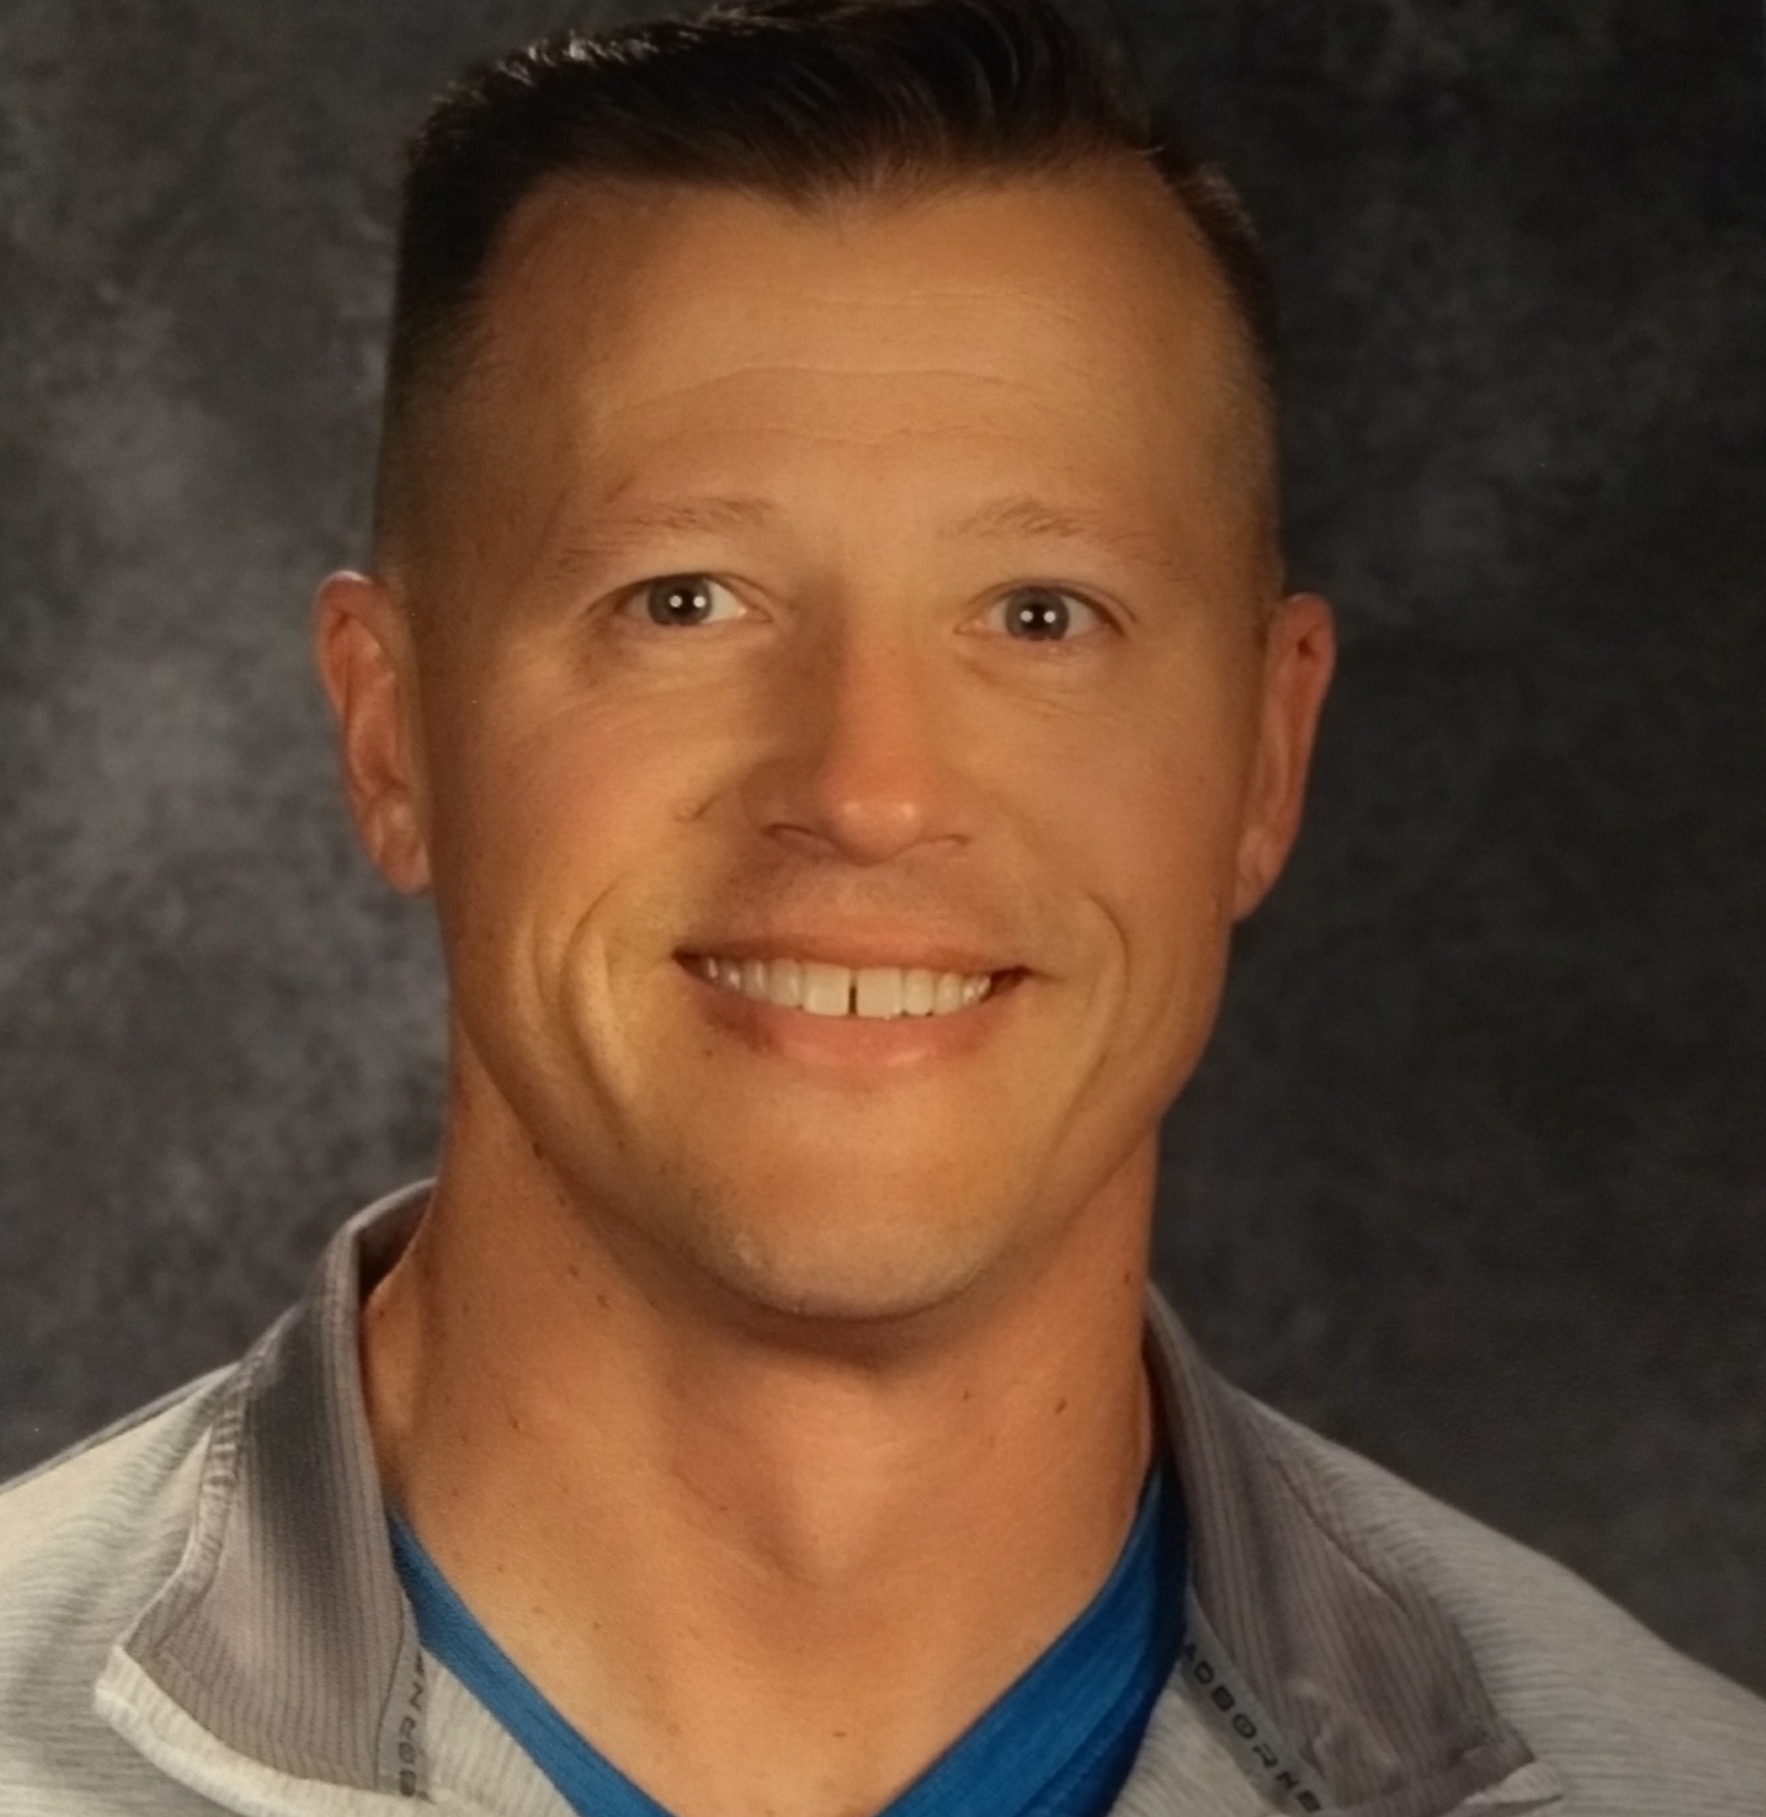 Asaptive sports: Headshot blonde man in tab jacket with bright blue t-shirt smiling into camera